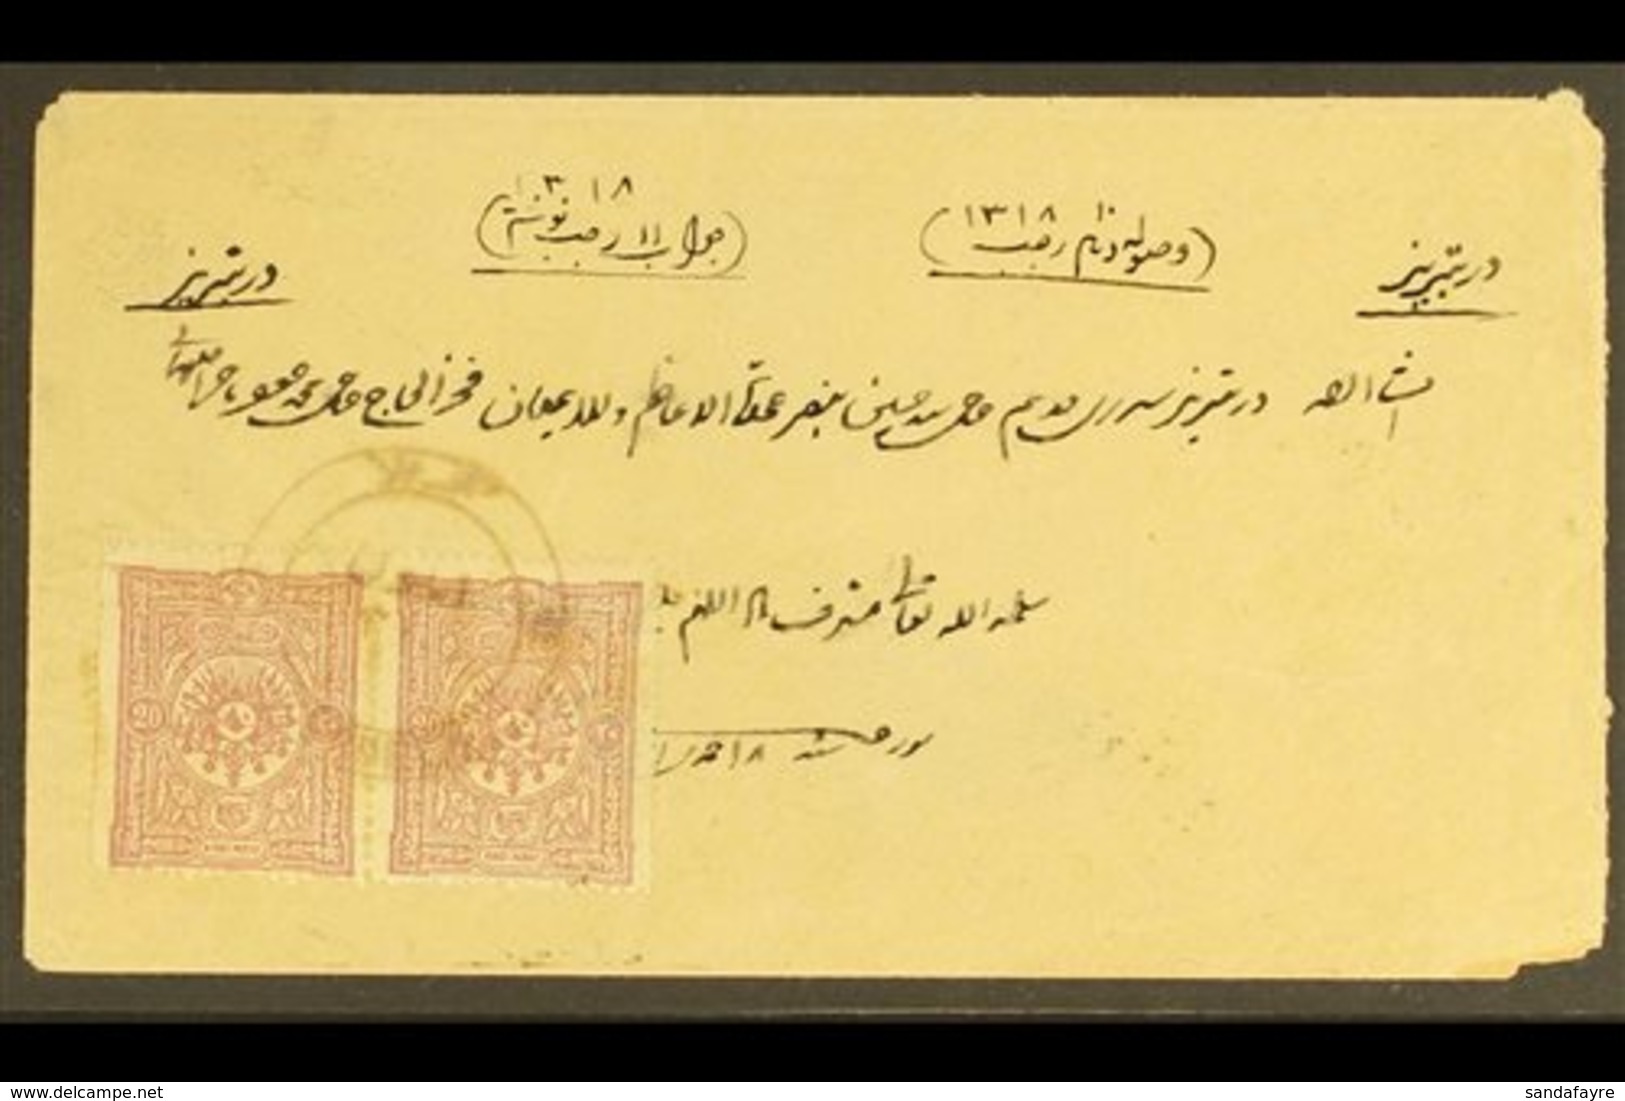 TURKEY USED IN IRAQ  C1900 Env To Persia, Bearing Ottoman 1892 20pa Pair Tied By Fine Upright "KERBELA" Bilingual Star C - Irak